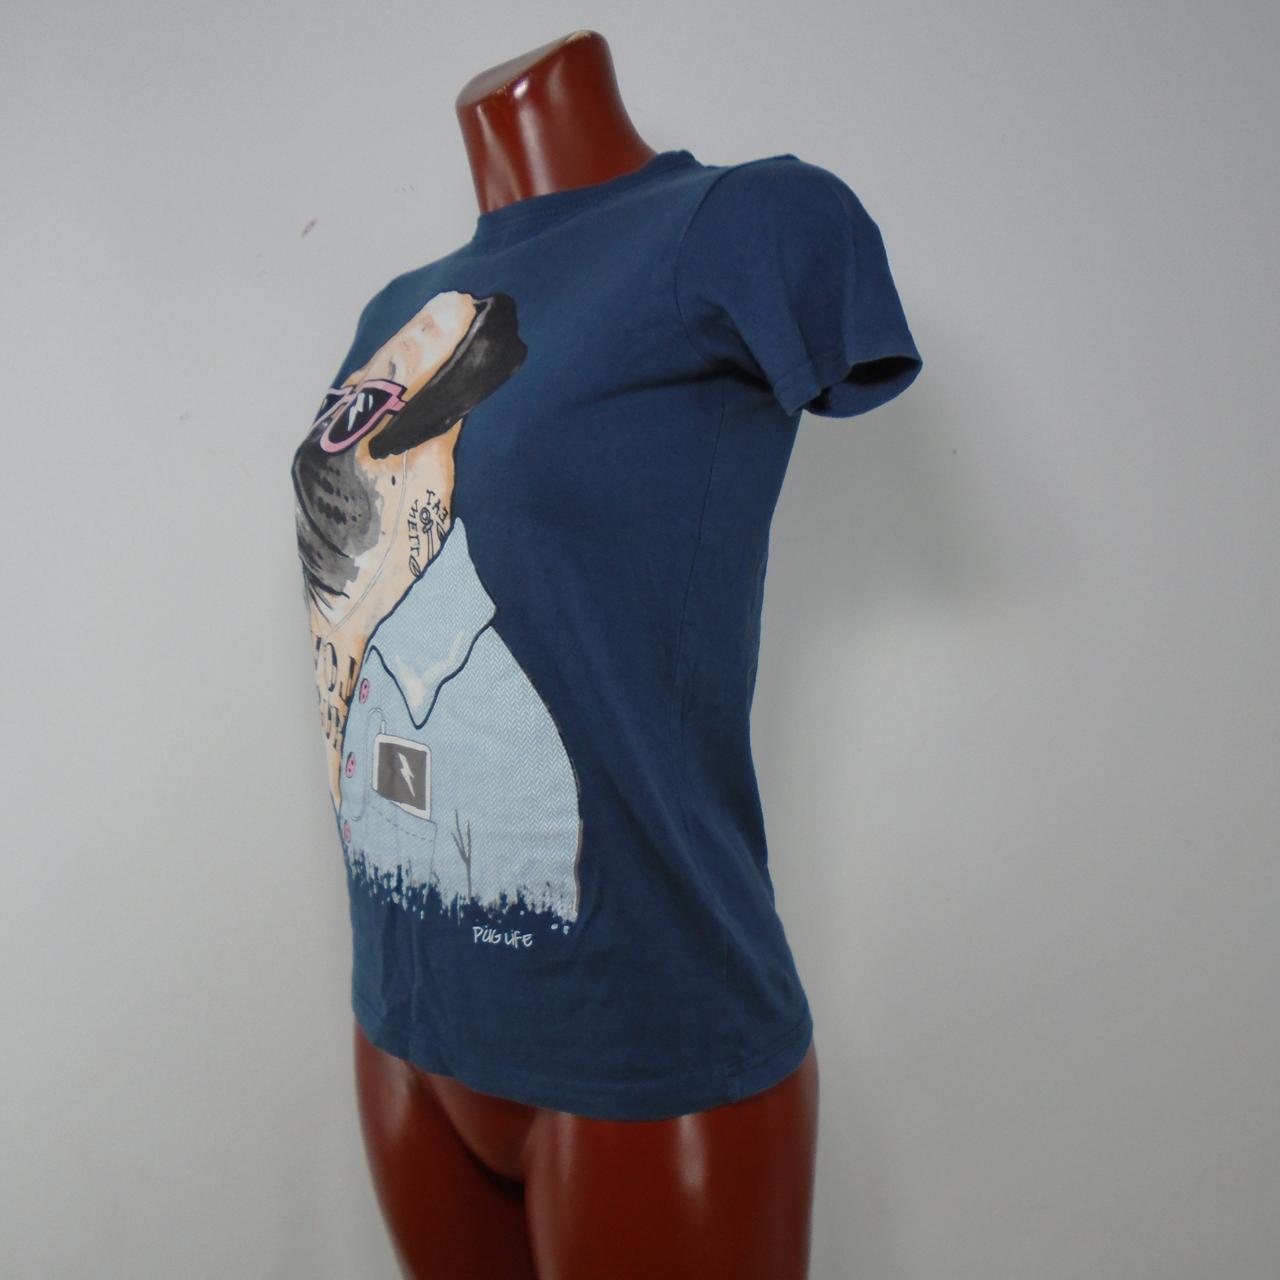 Camiseta Mujer Primark. Azul oscuro. XS. Usado. Bien